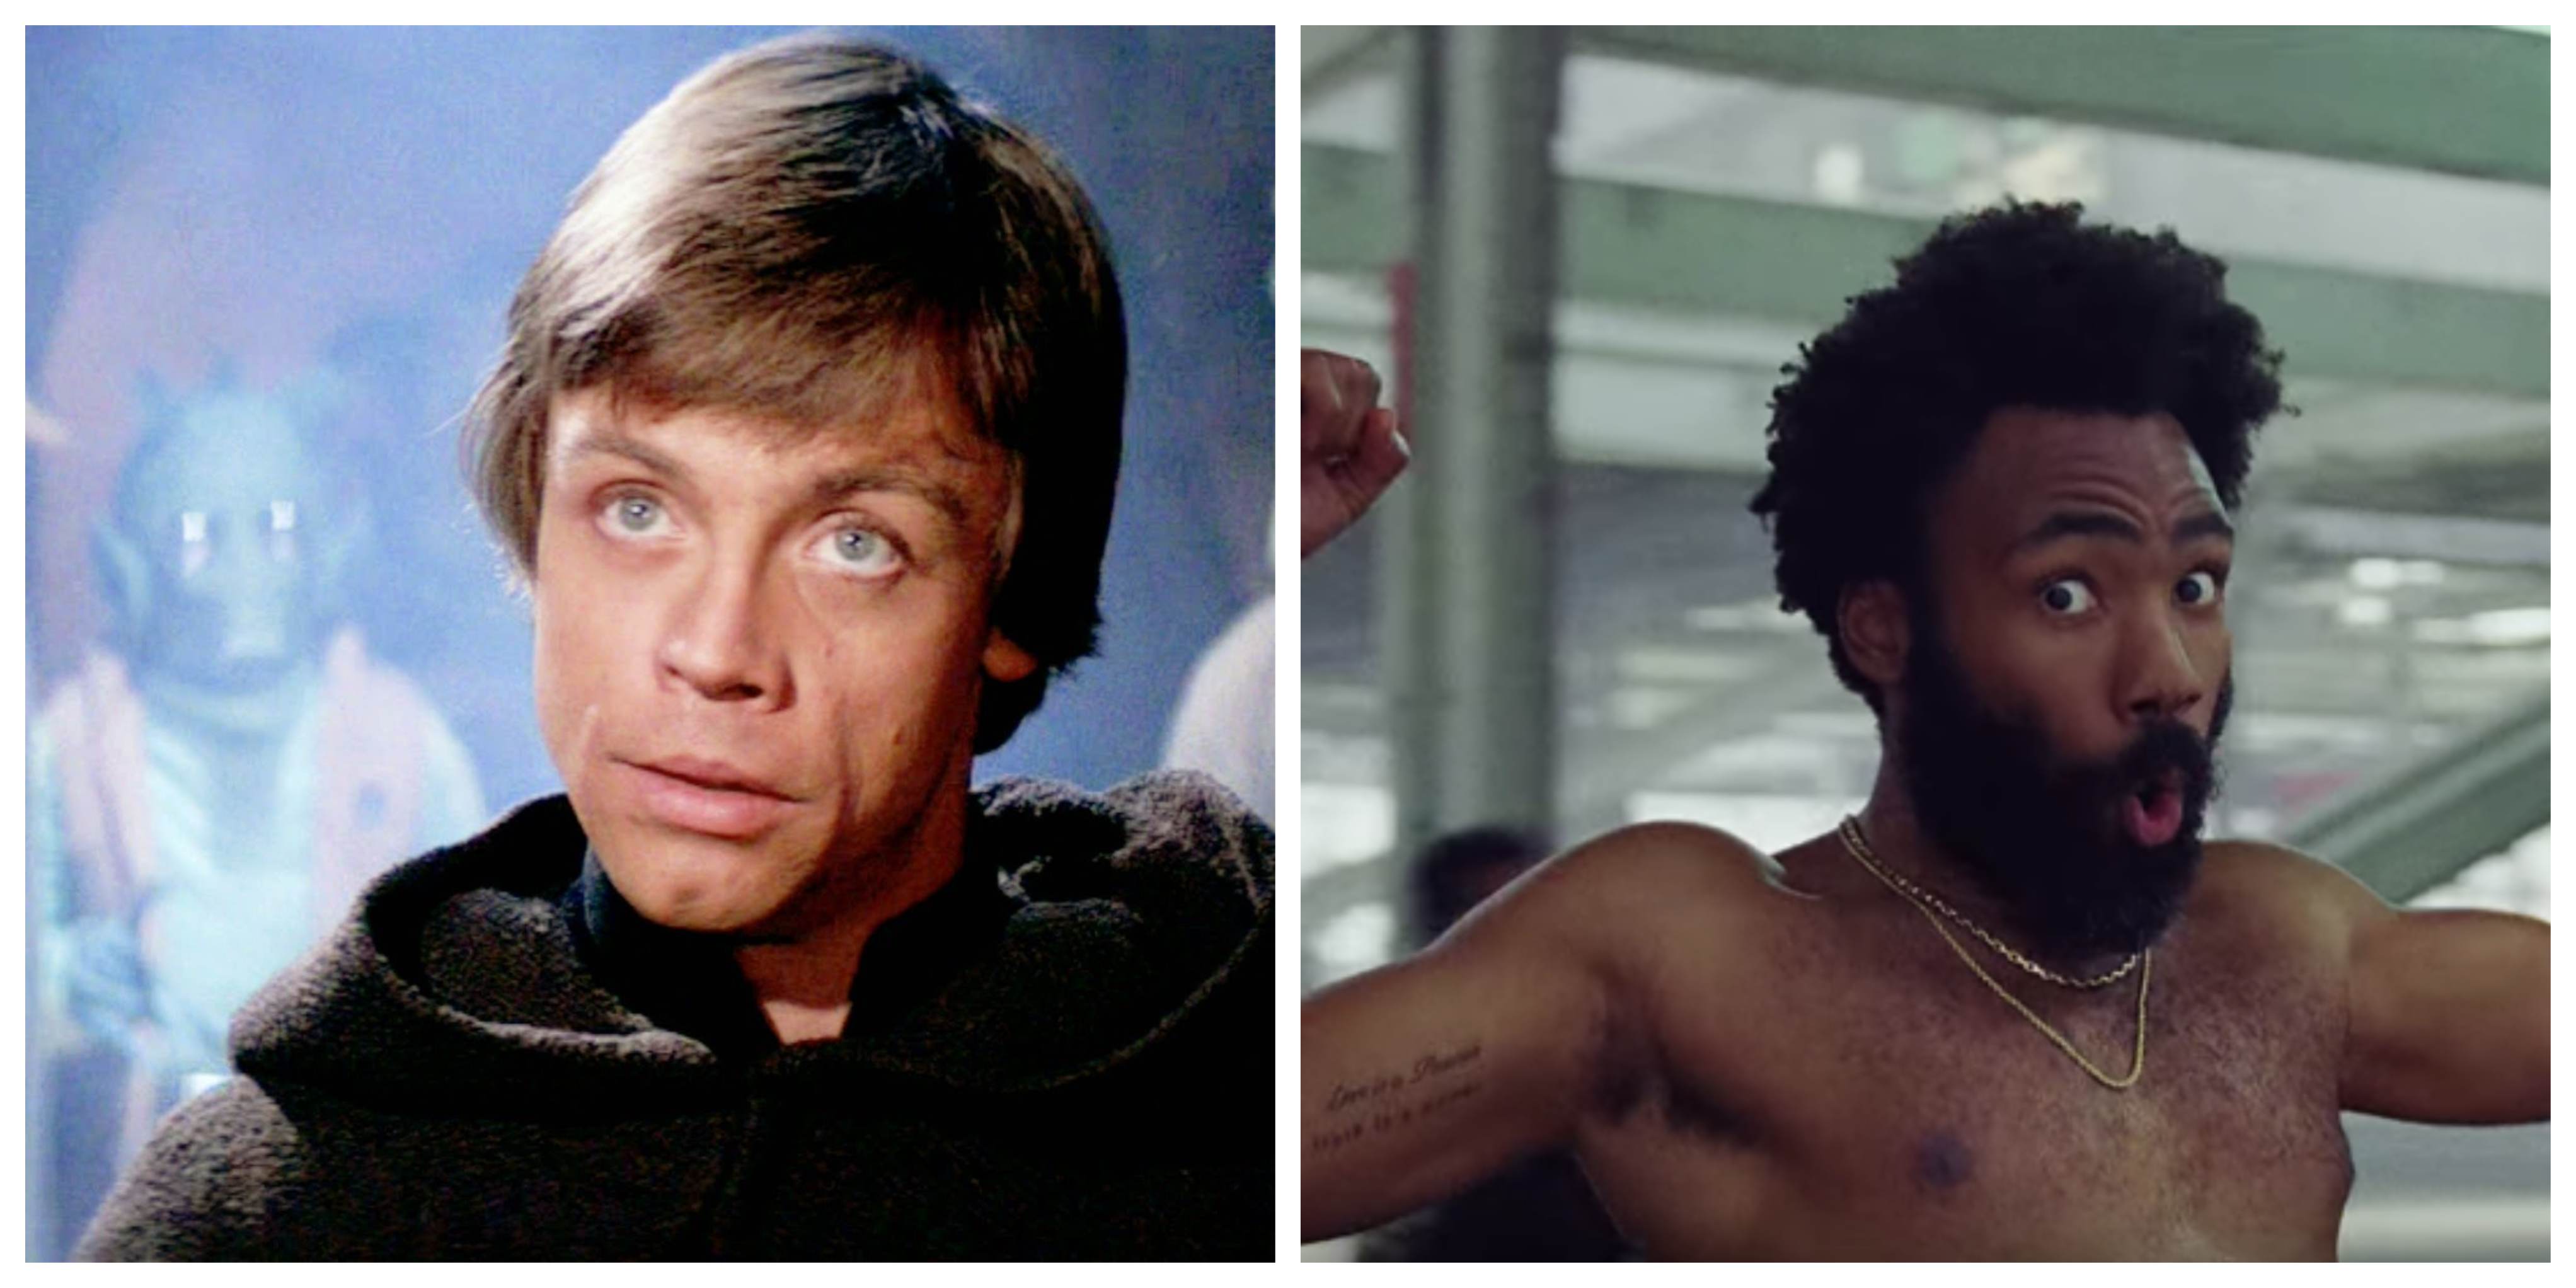 The Scenario: Could Donald Glover Be Luke Skywalker?